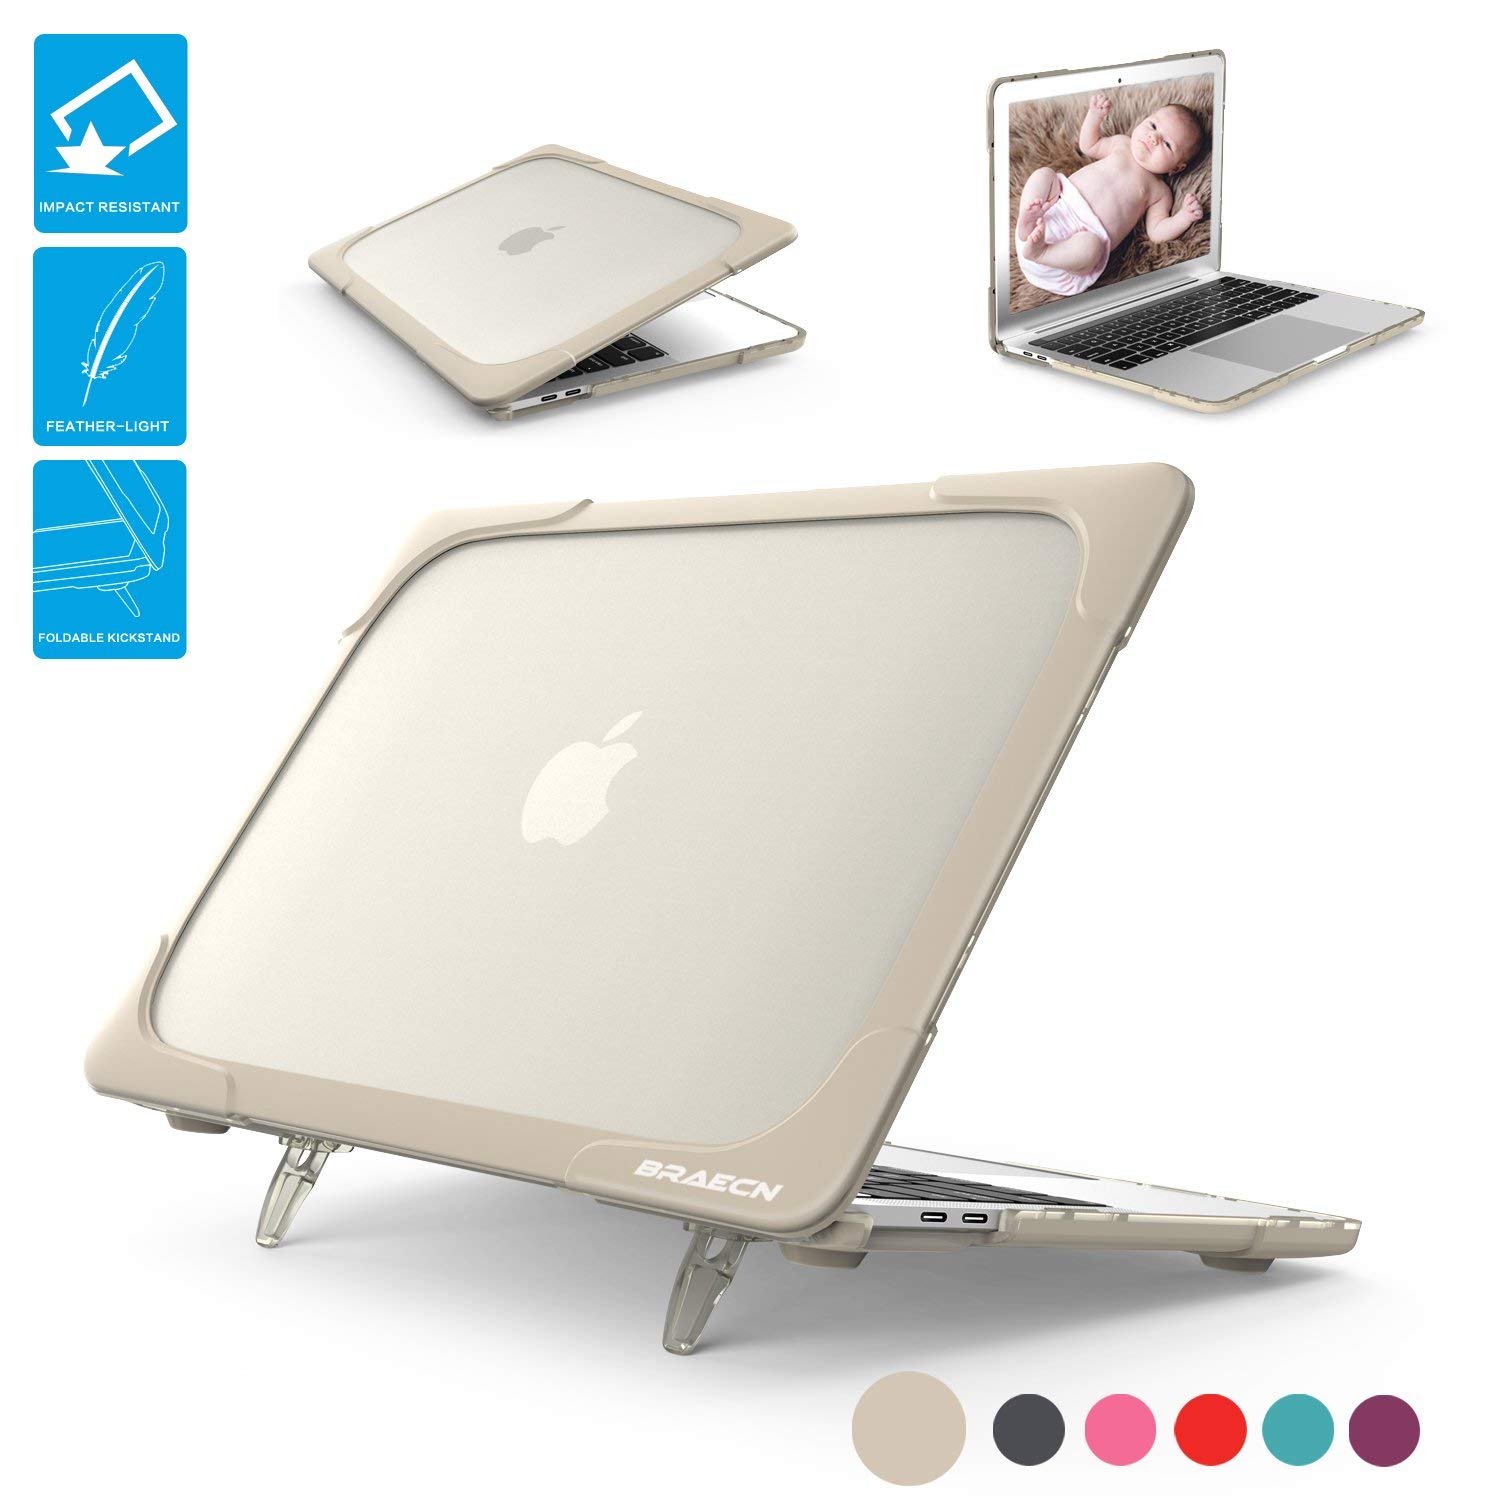 [7美國直購] 保護殼帶支架 BRAECN stock for MacBook 12 Inch Case, [Heavy Duty] Slim Rubberized B075T84YQF